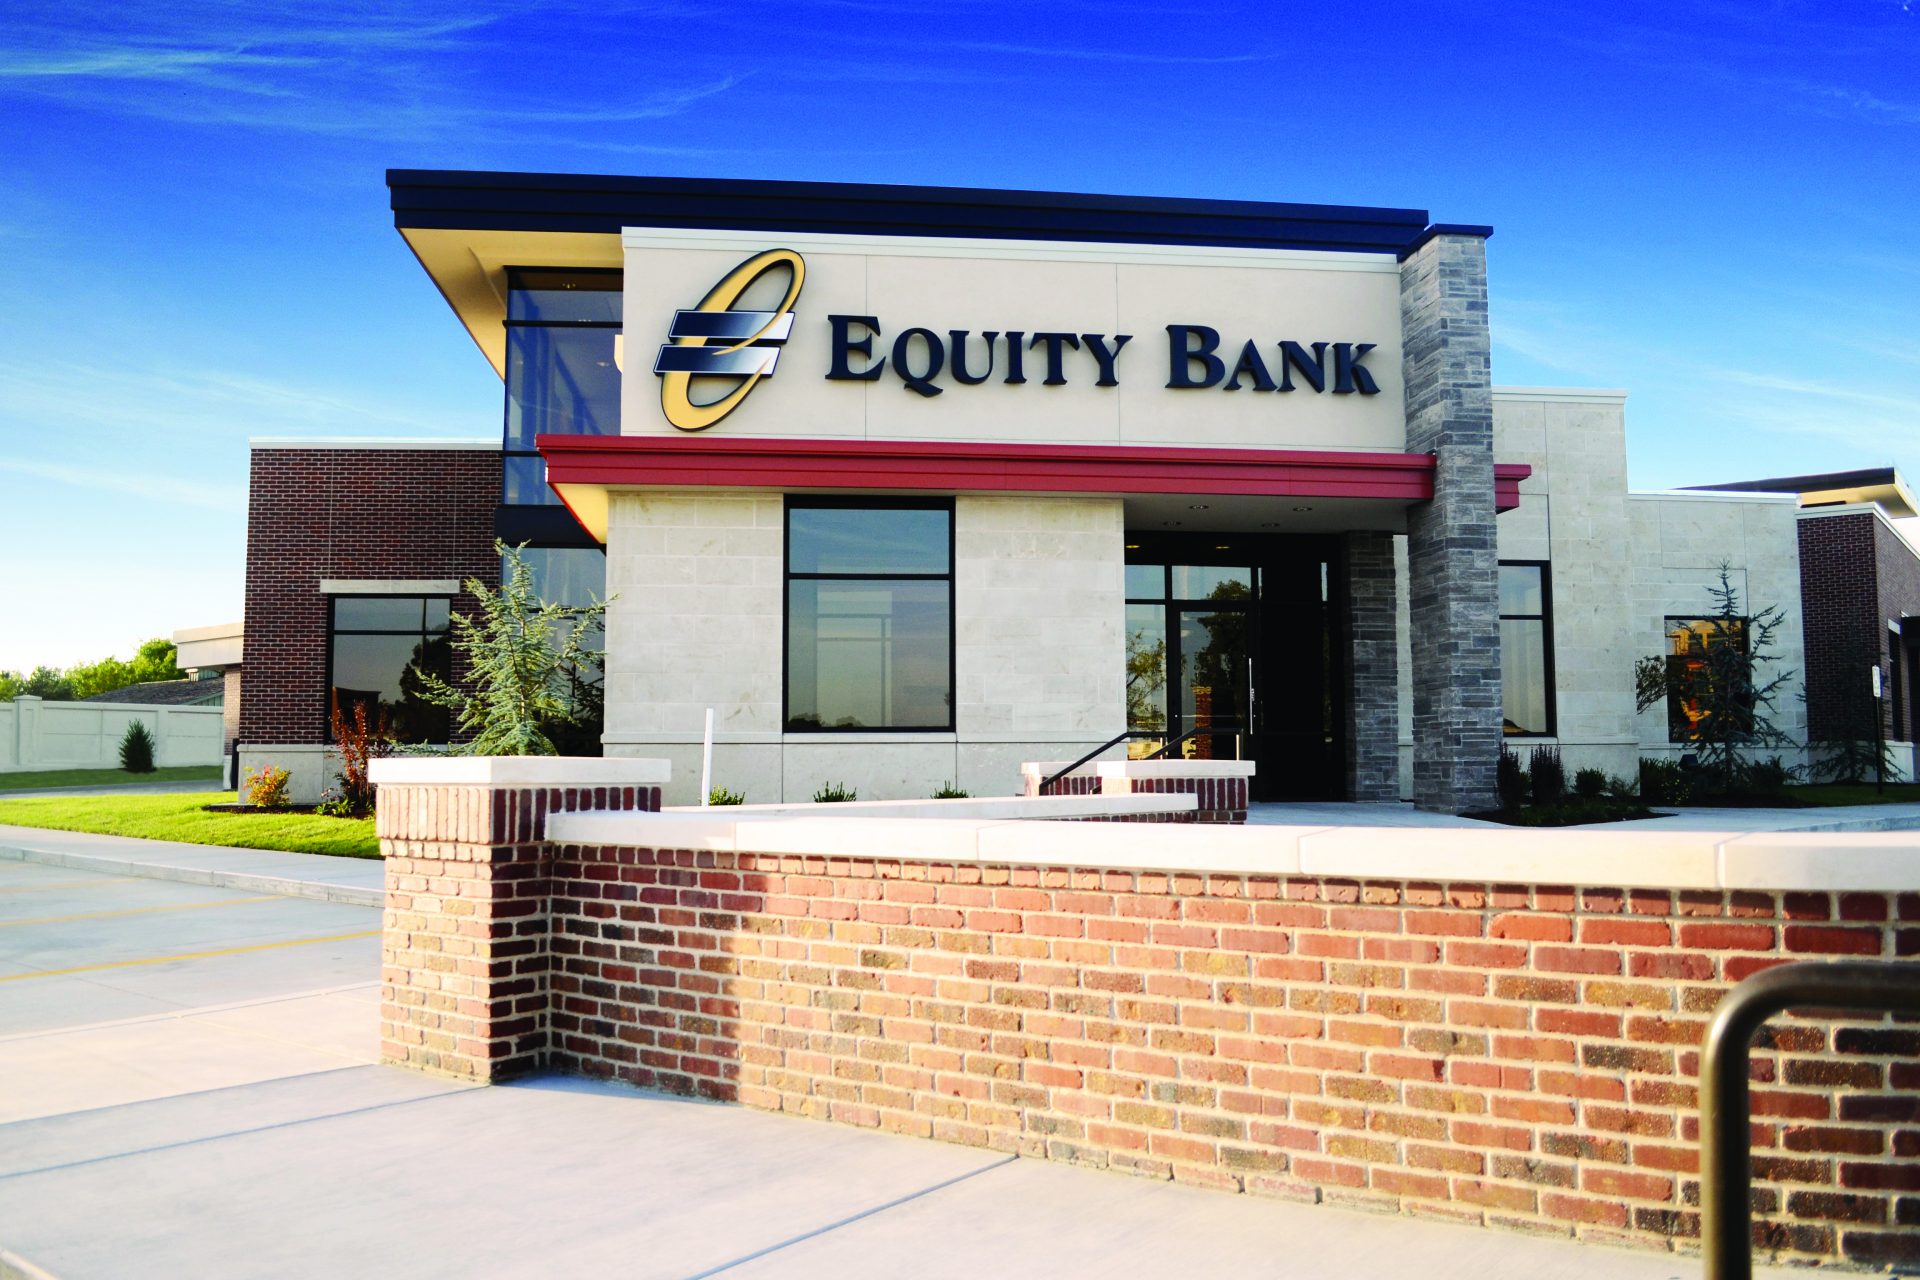 Equity Bank Wichita Webb Road branch exterior.